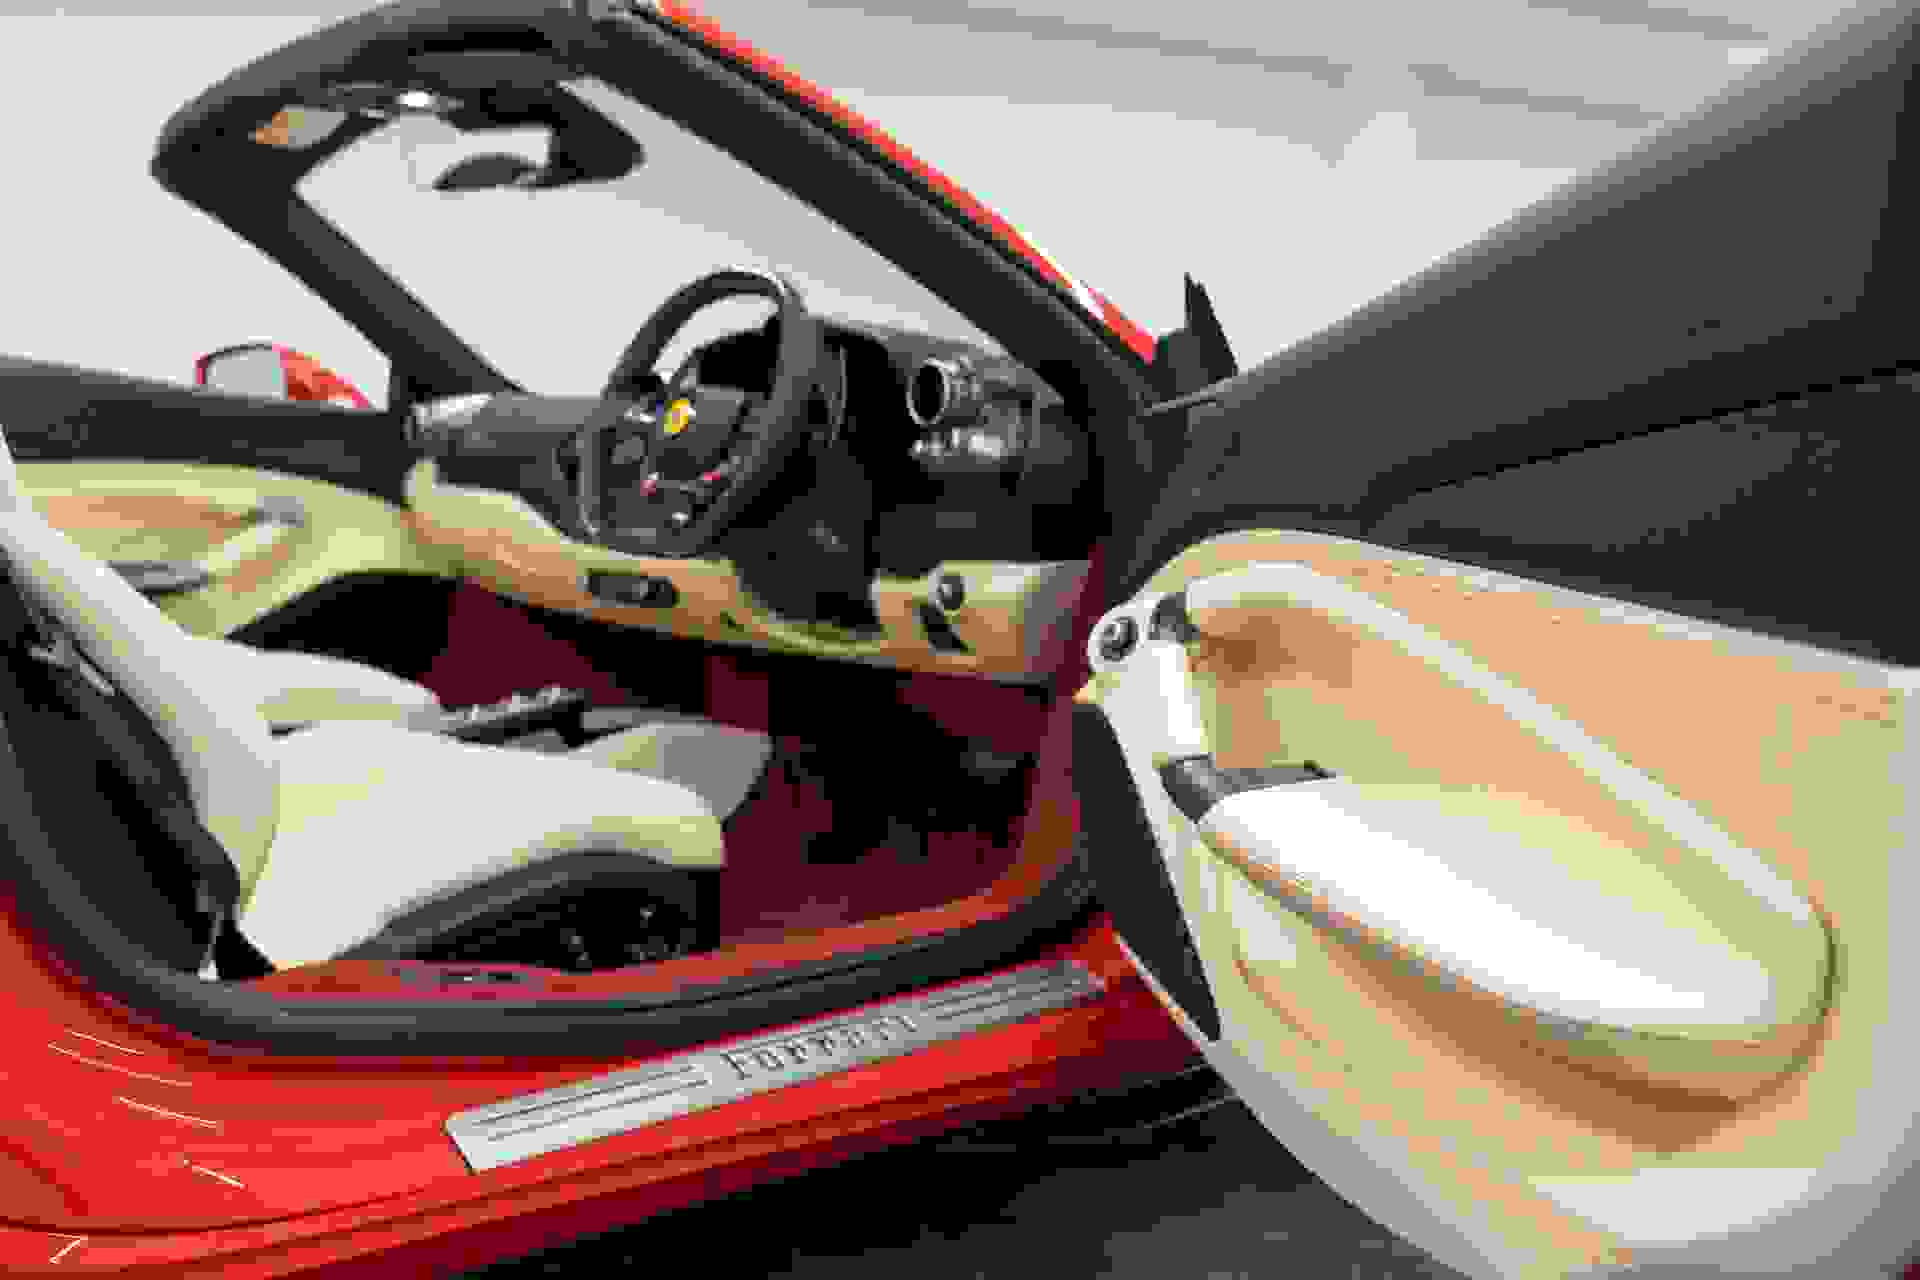 Ferrari F8 Photo bab0e011-18c2-4aeb-9488-336694b4ad4f.jpg